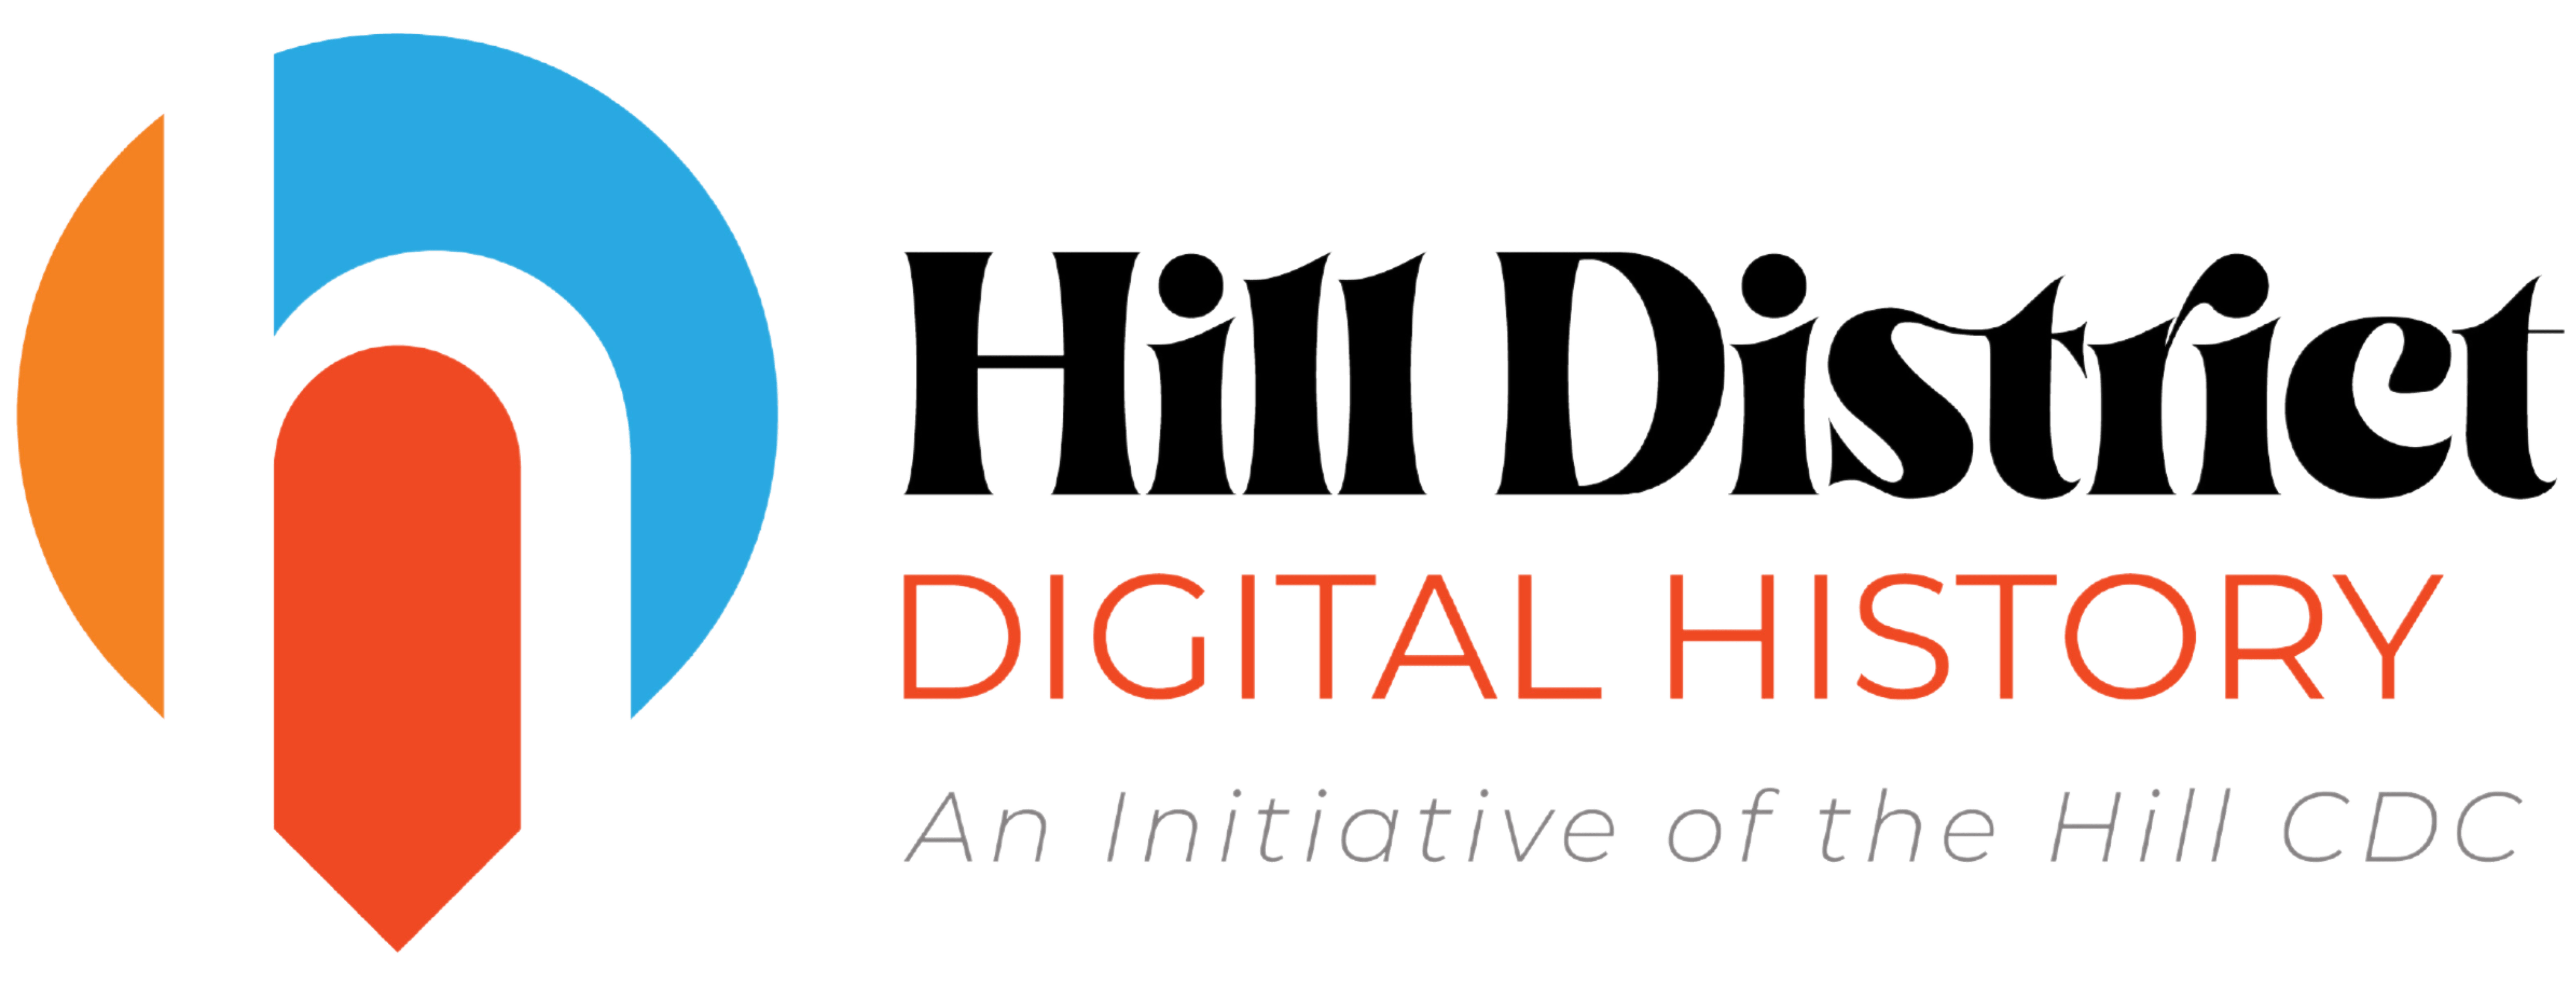 Hill District Digital History Logo